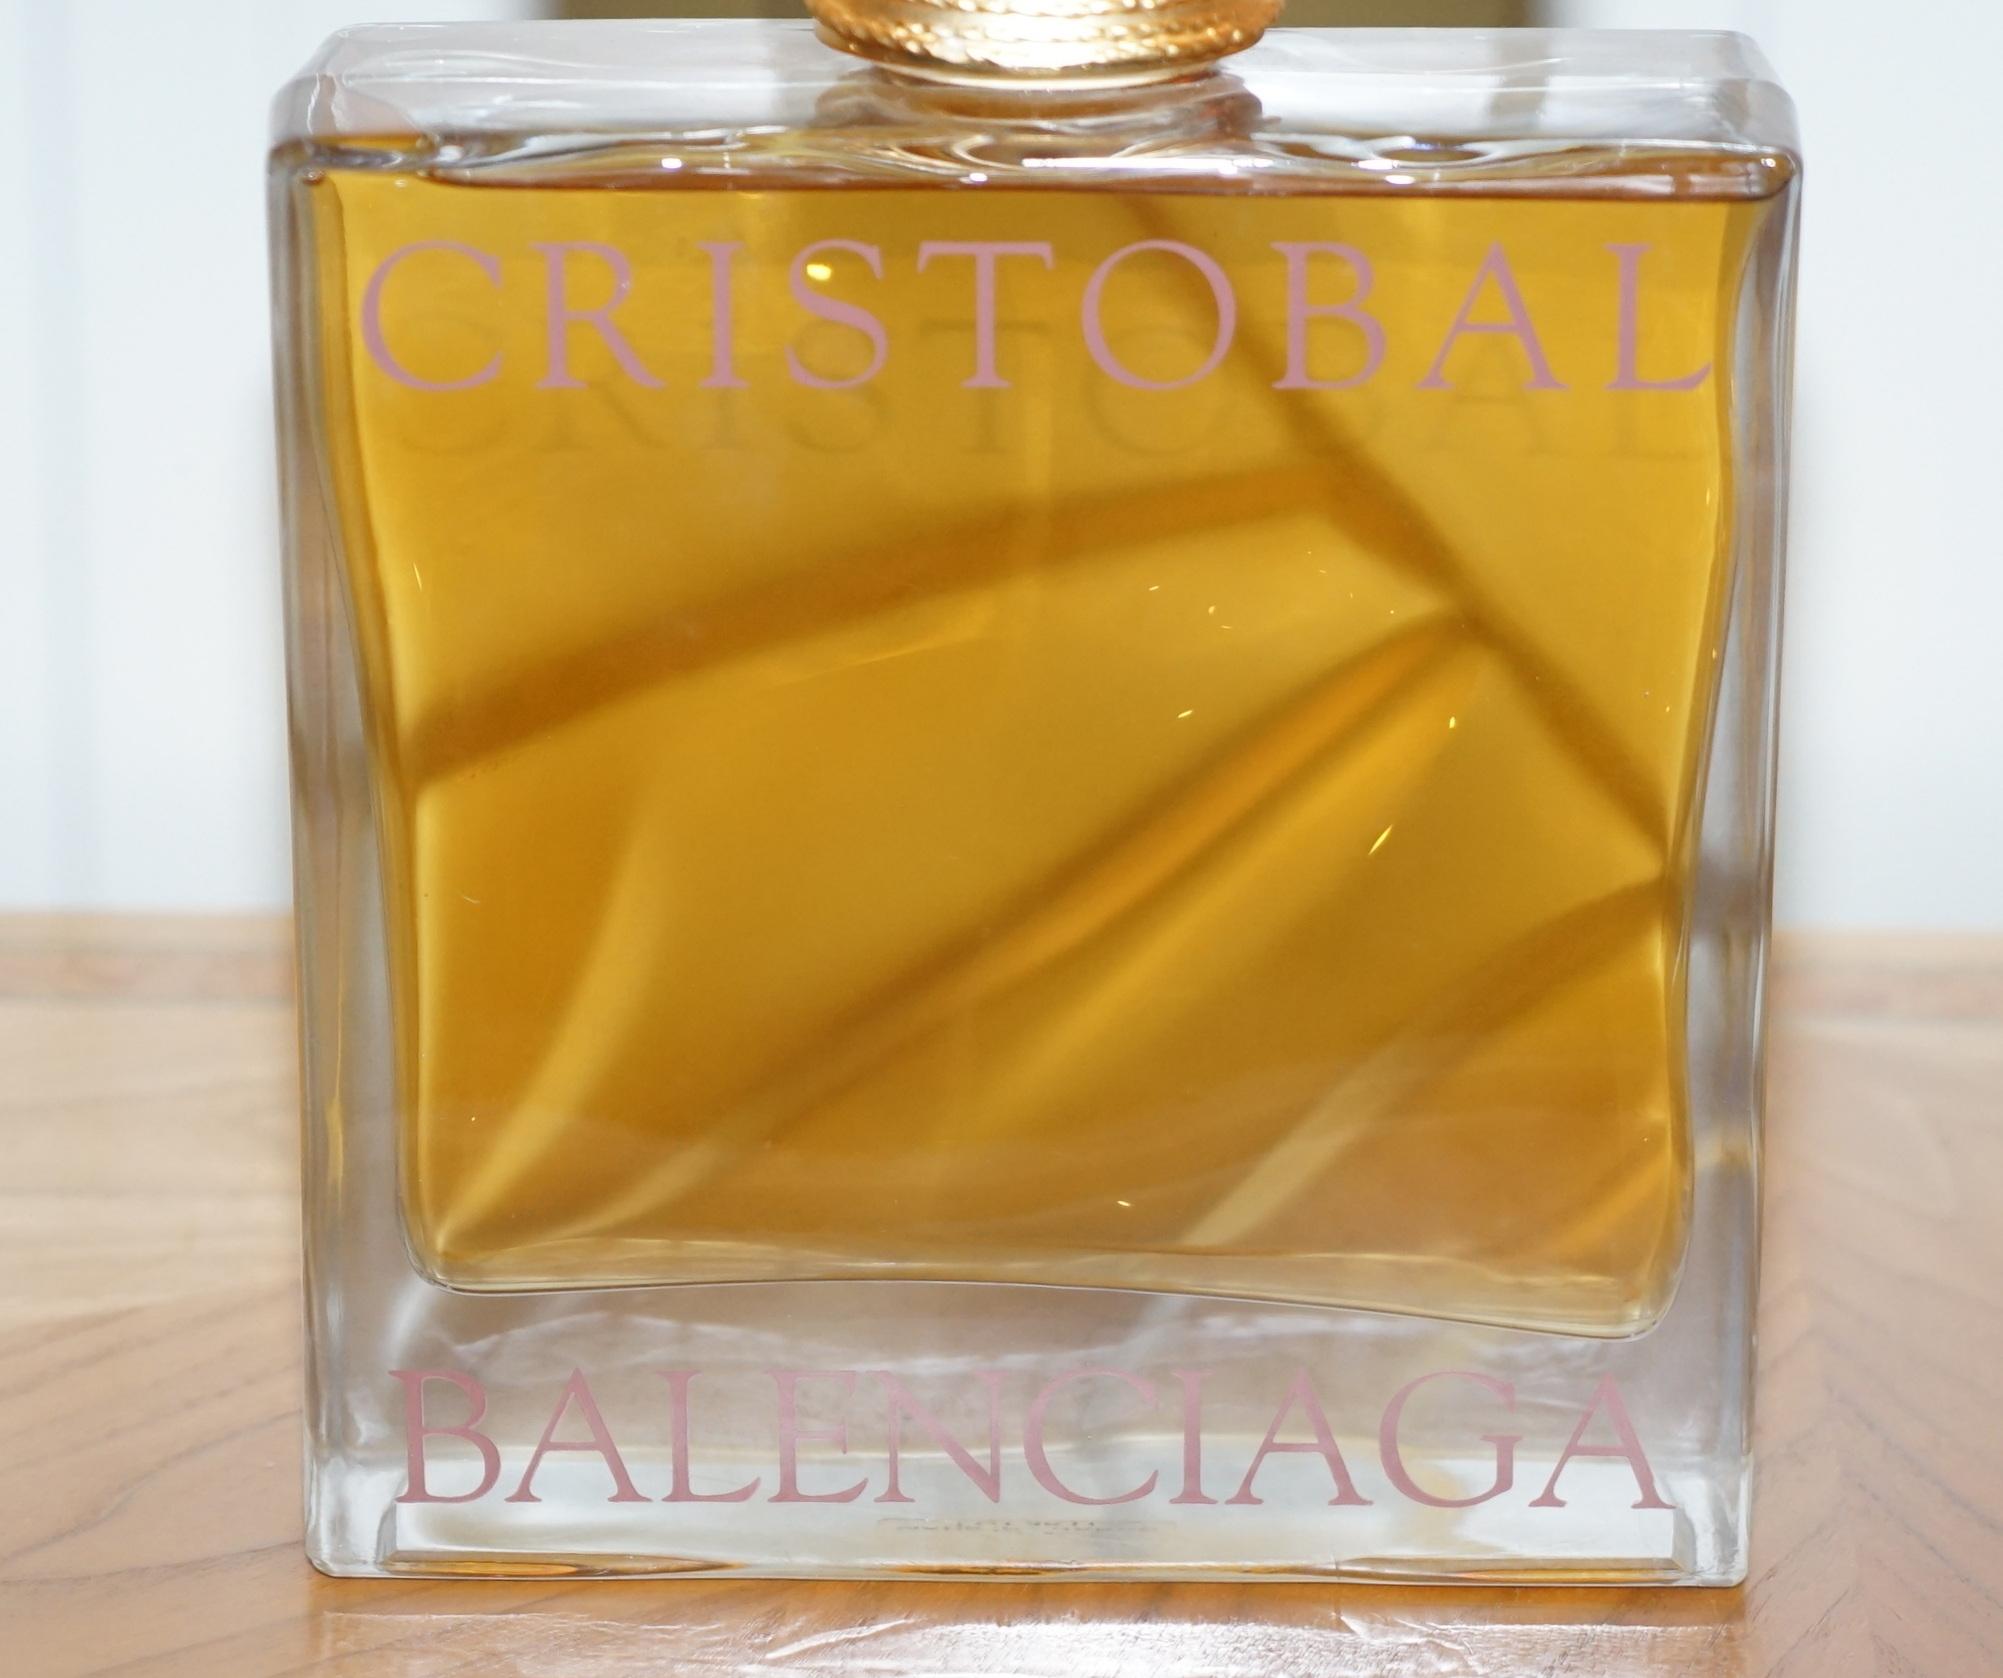 Modern Giant Display Bottle with Real Eau De Parfum Perfume Cristobal Balenciaga